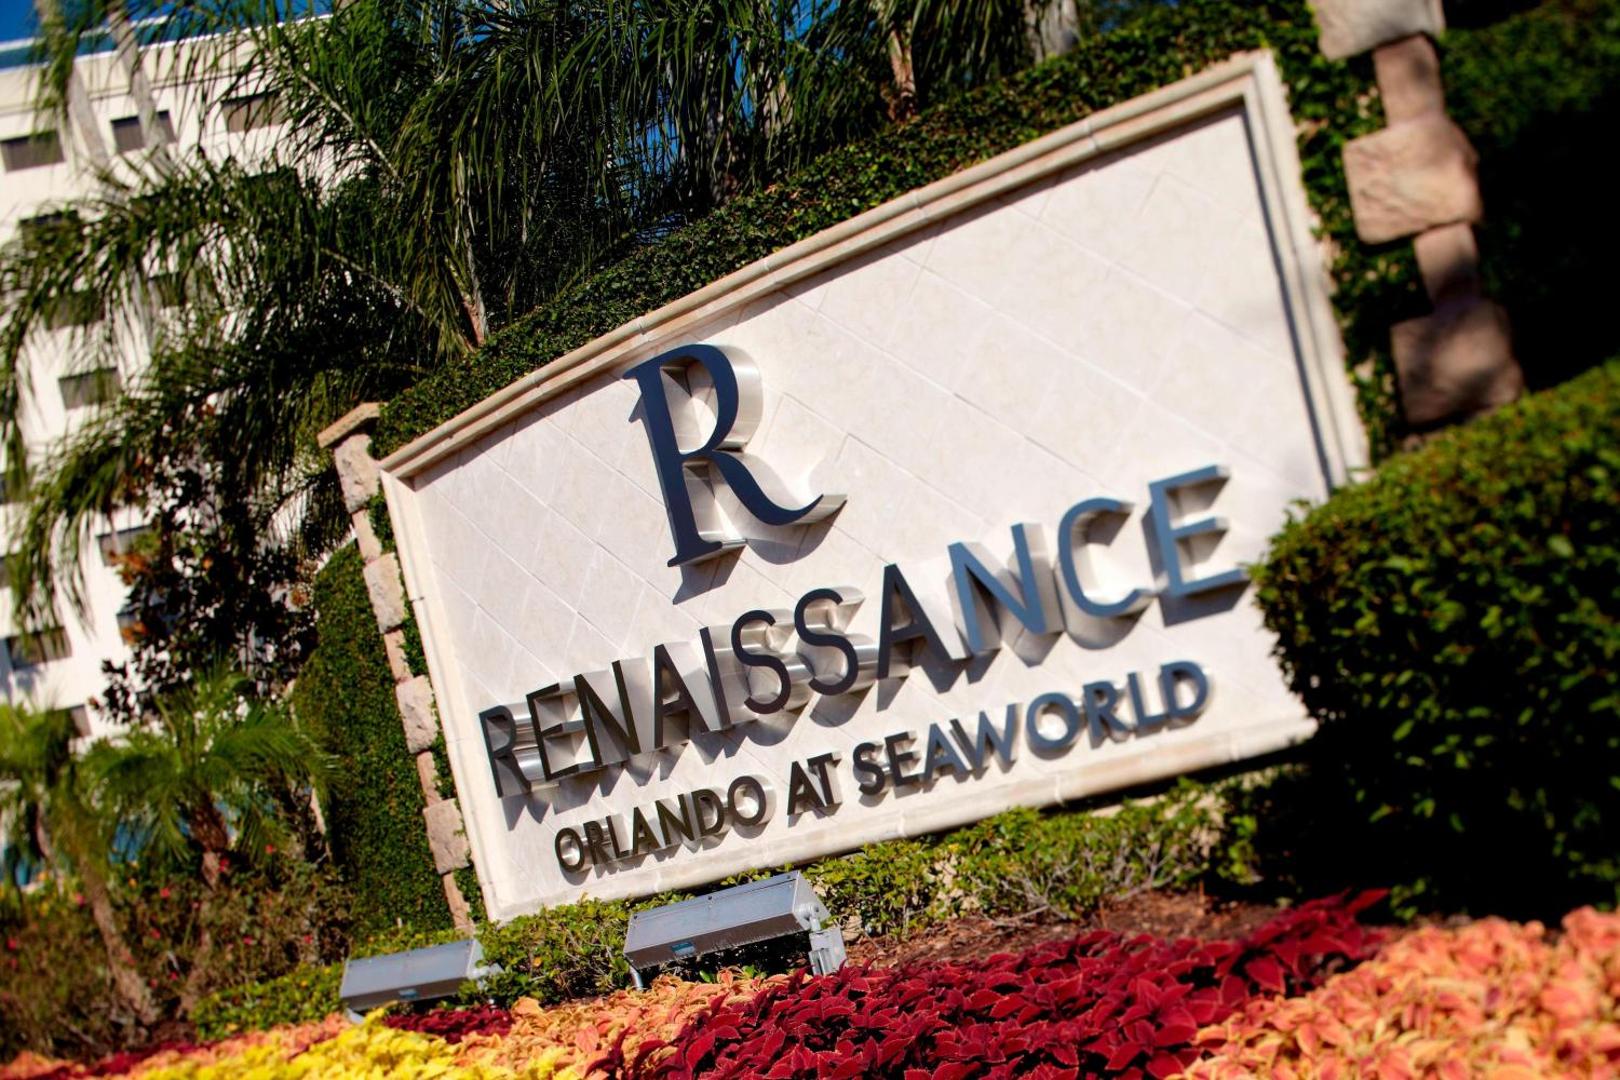 Renaissance Orlando Resort at SeaWorld